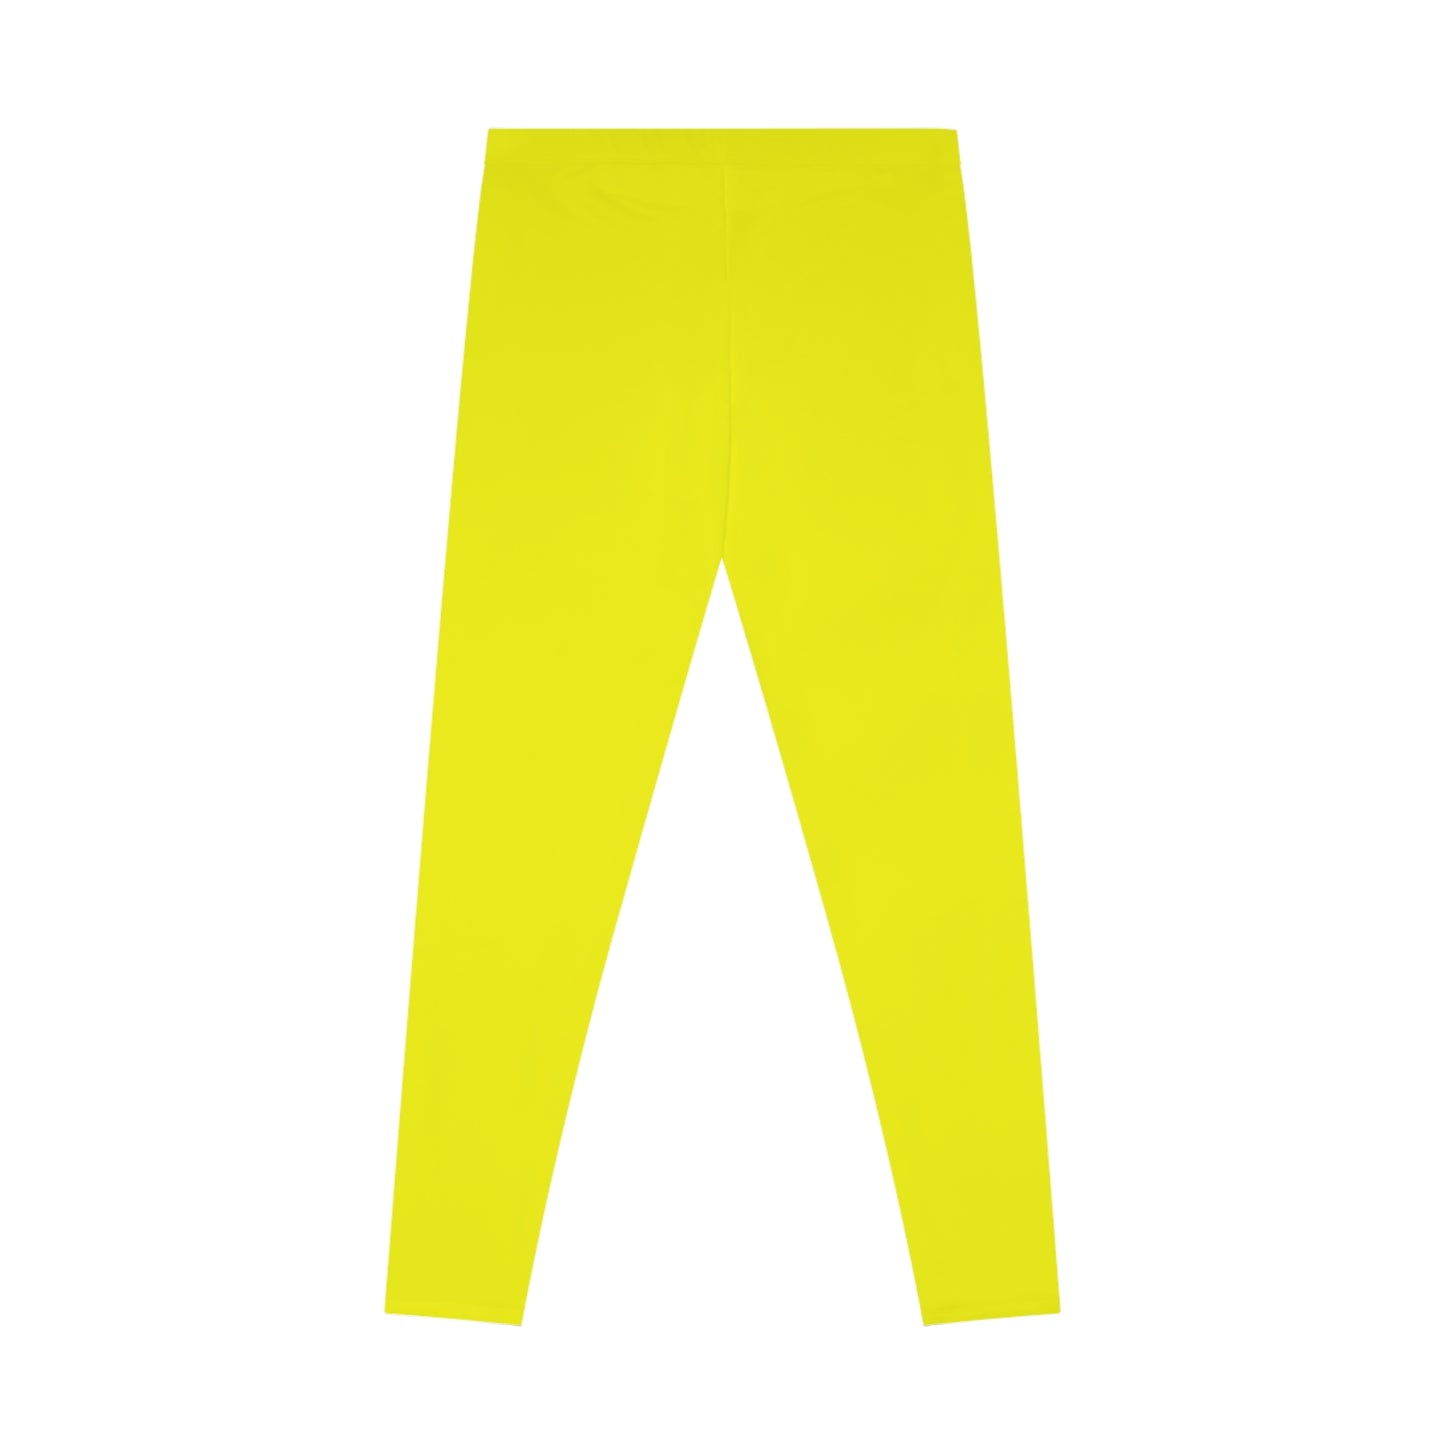 Neon Yellow FFFF00 - Unisex Tights